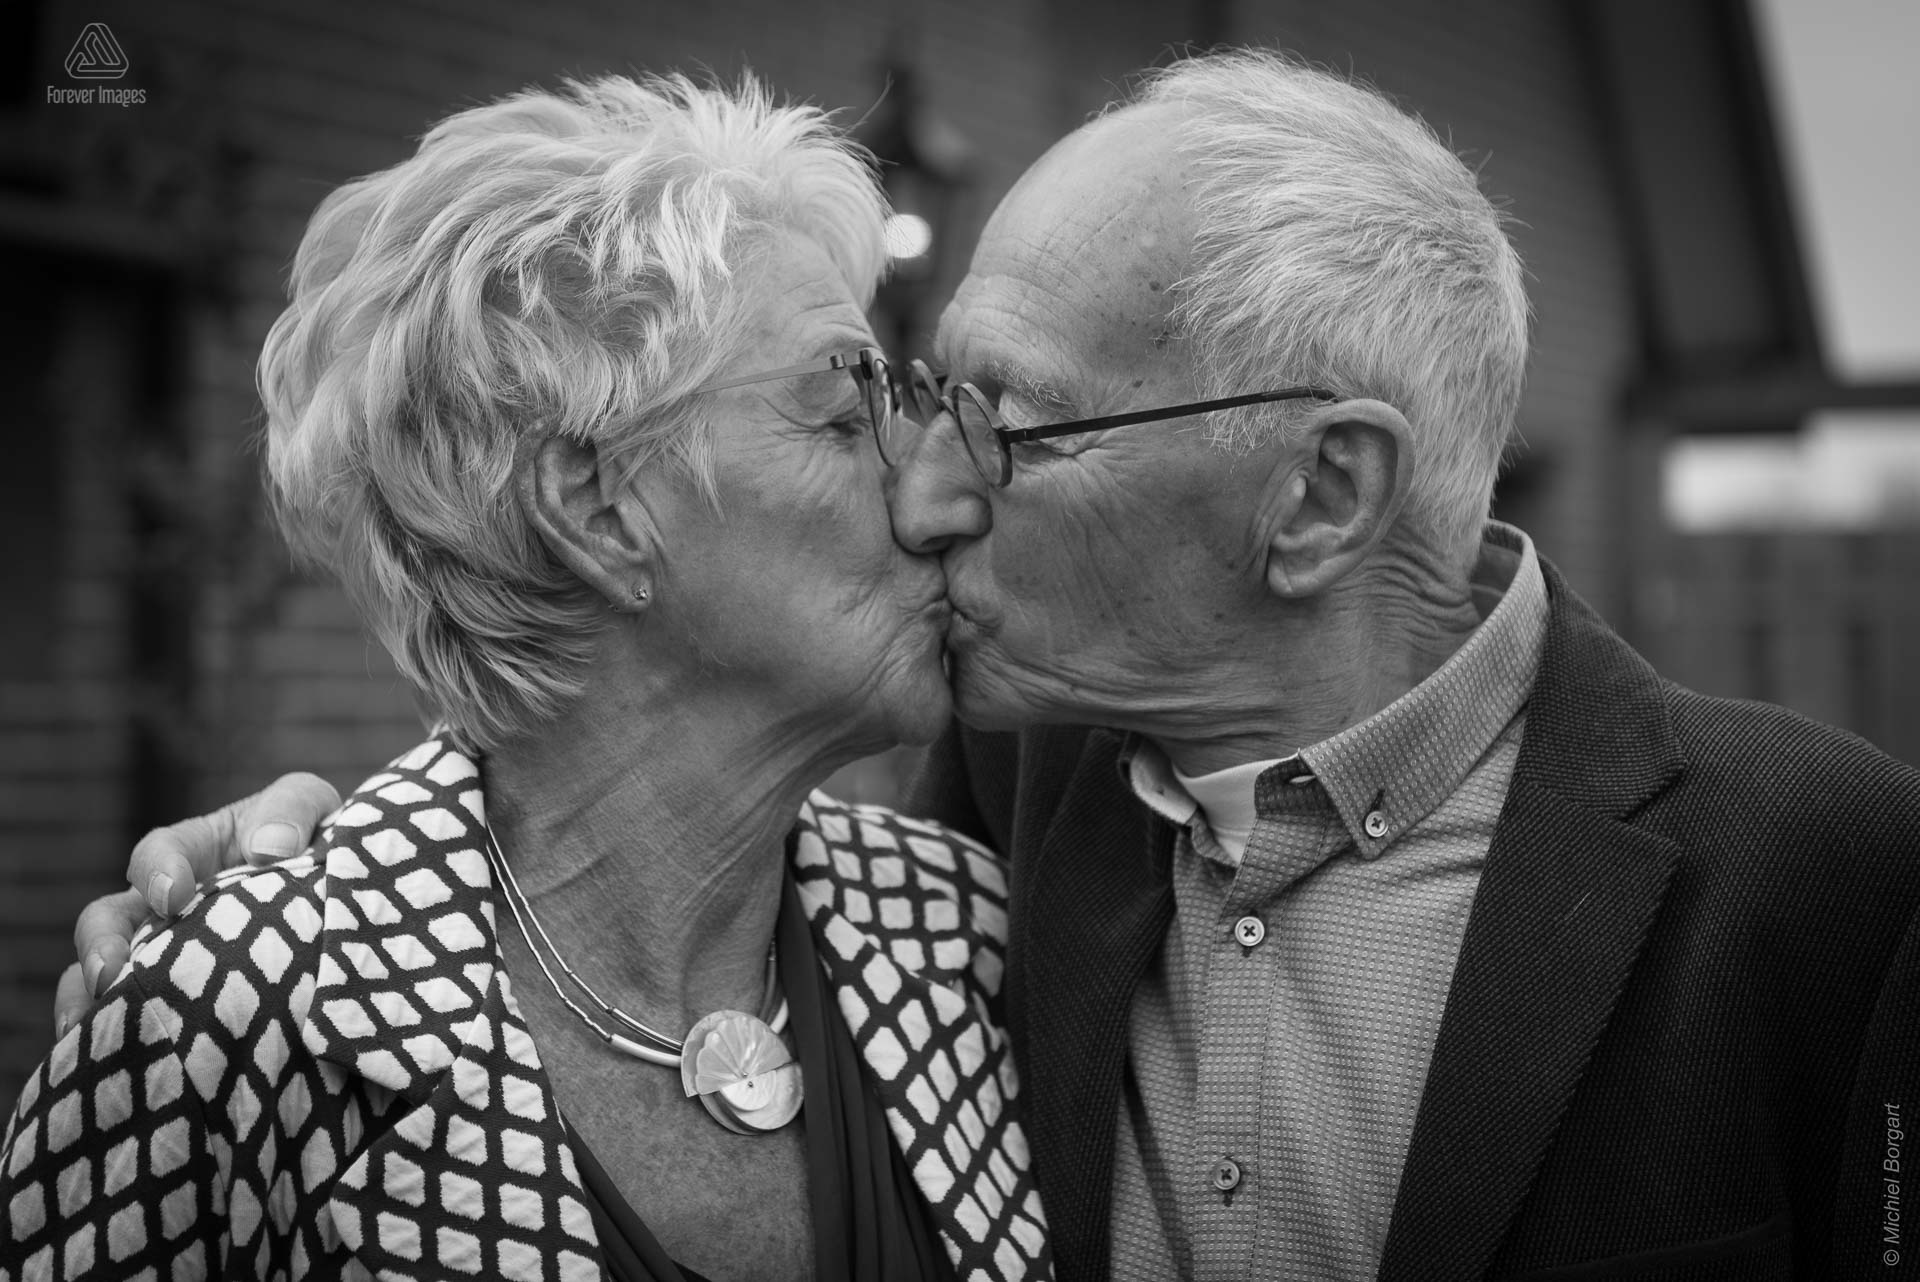 Loveshoot zwart-witfoto oud echtpaar kussend in tuin | Portretfotograaf Michiel Borgart - Forever Images.